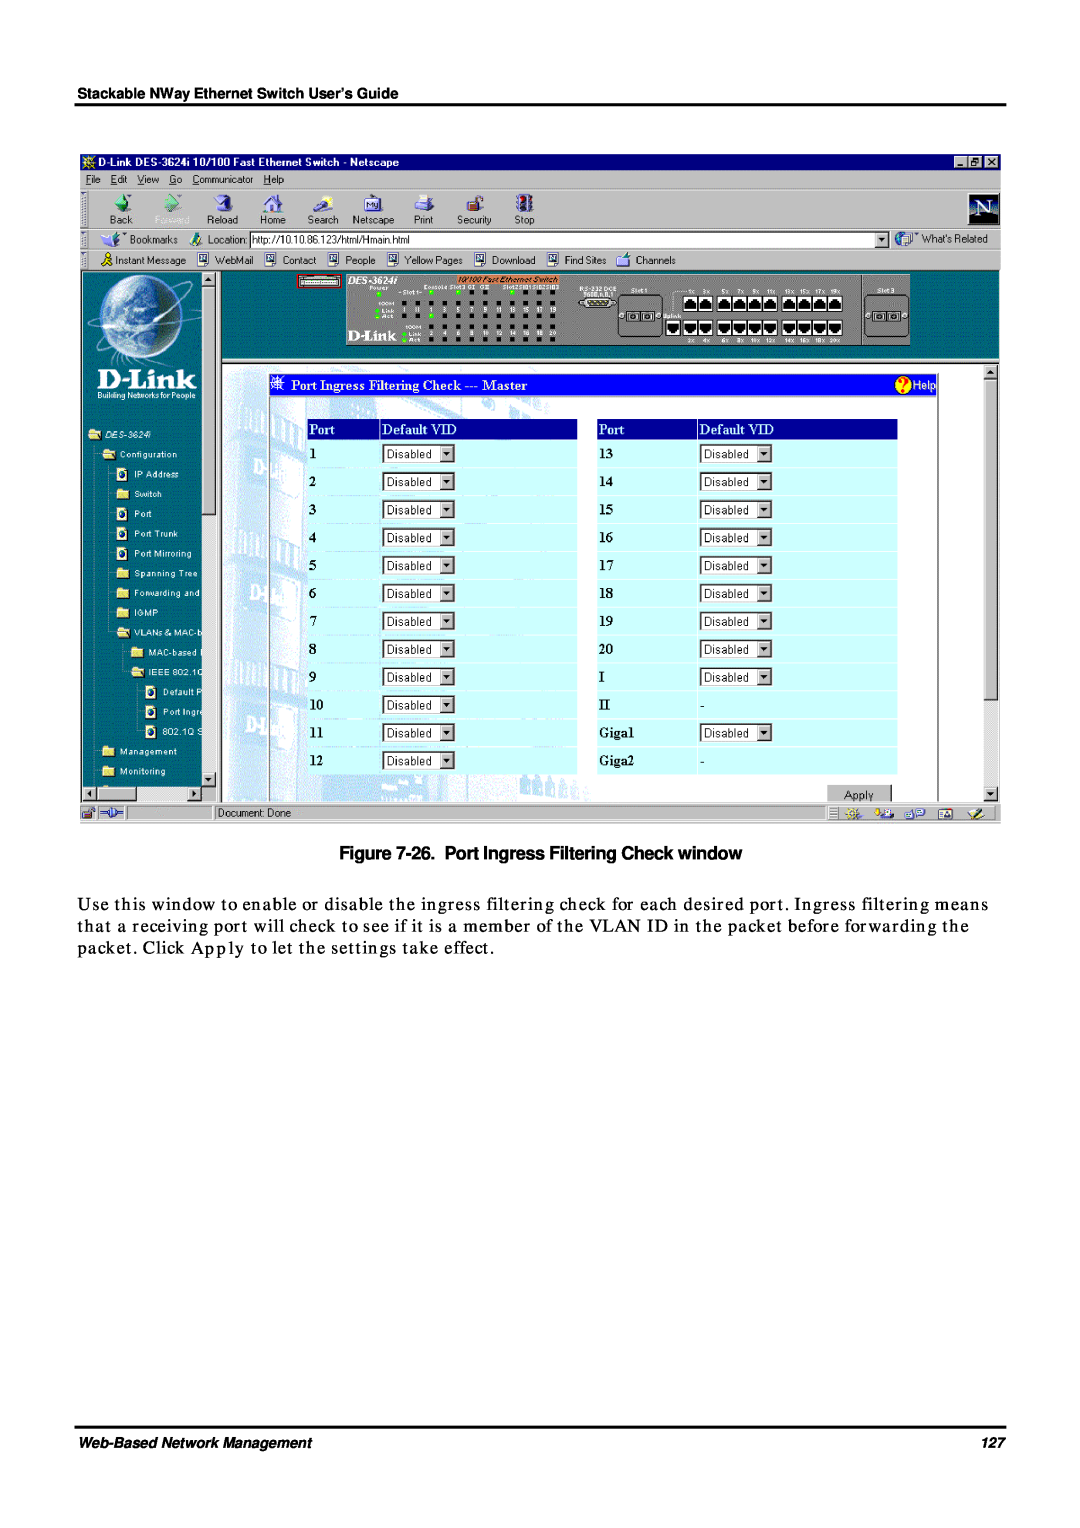 D-Link DES-3624 manual 26. Port Ingress Filtering Check window, Stackable NWay Ethernet Switch User’s Guide 